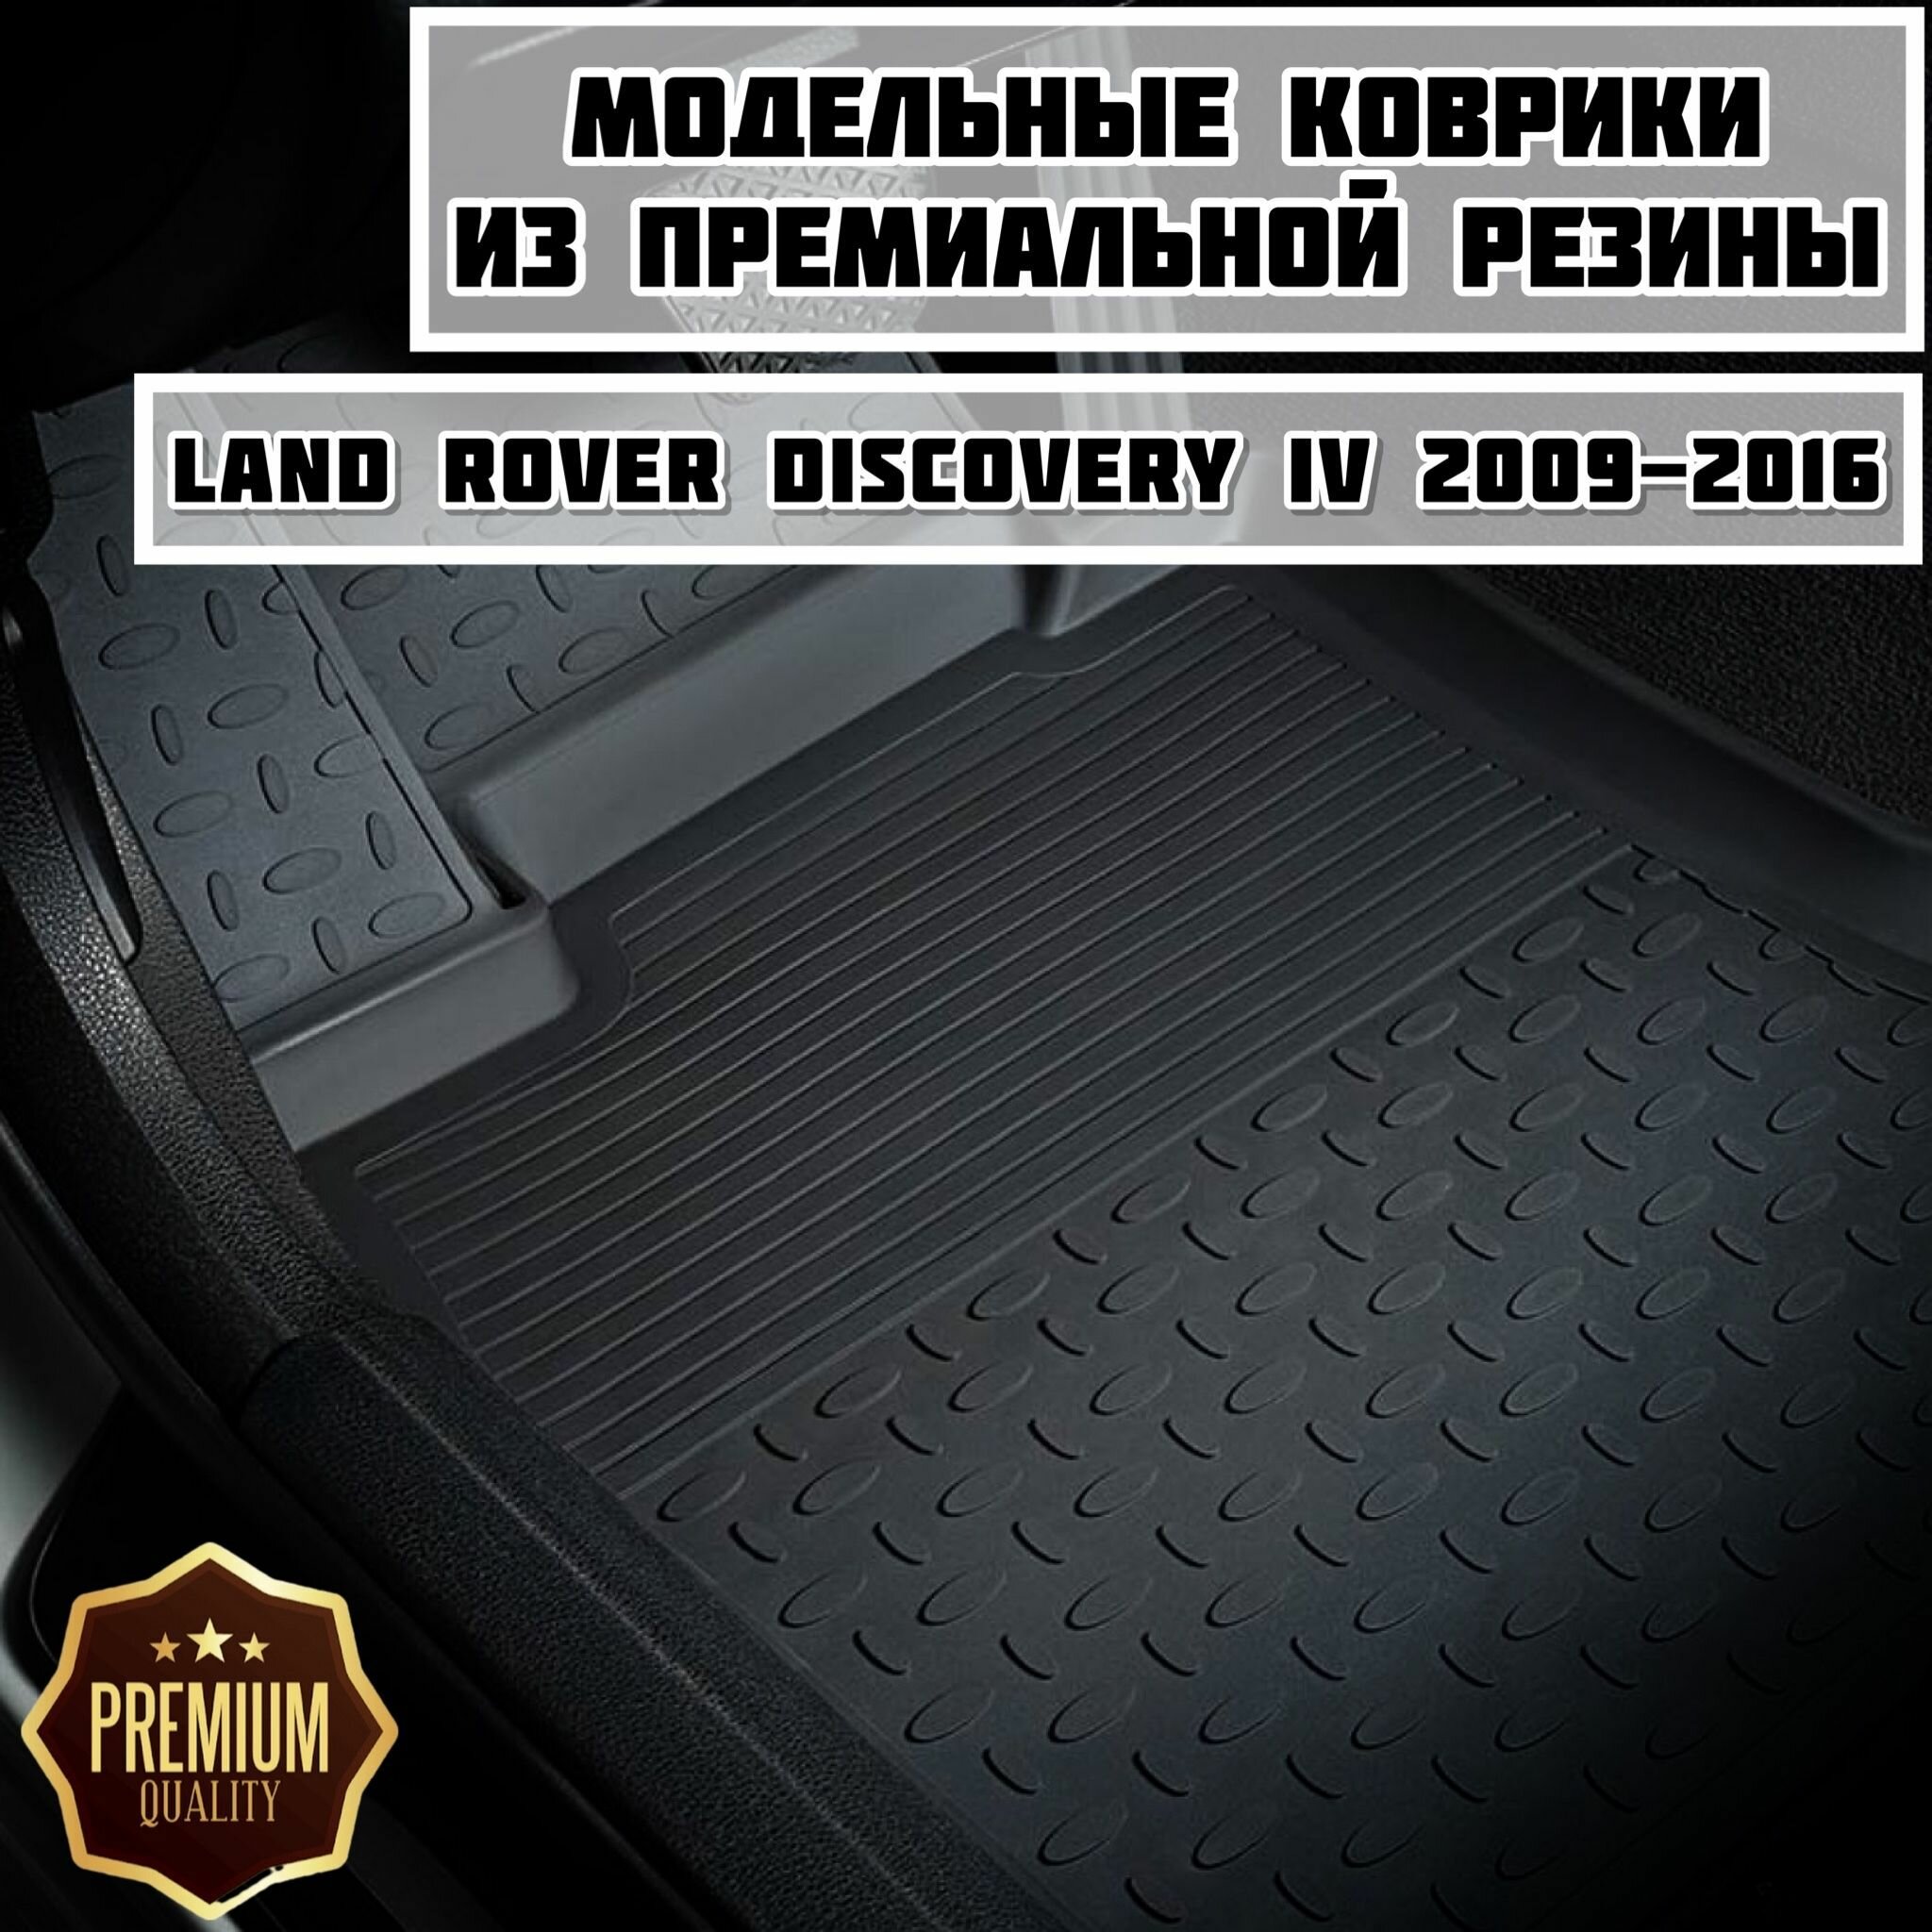 Коврики резиновые в салон Land Rover Discovery IV 2009-2016